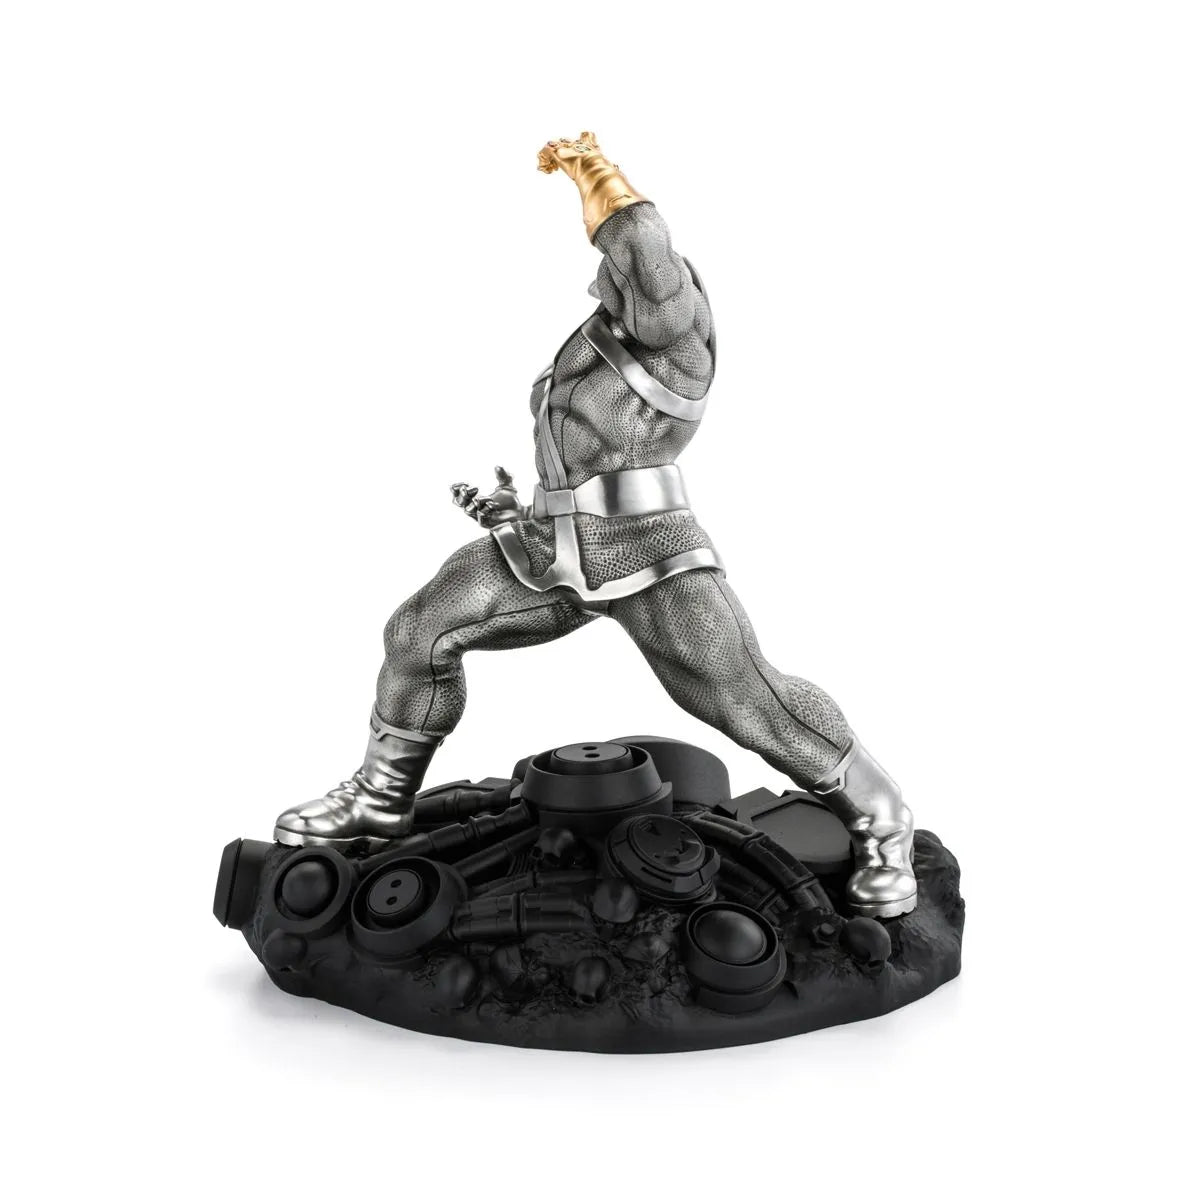 Thanos the Conqueror Limited Edition Metal Figurine by Royal Selangor -Royal Selangor - India - www.superherotoystore.com